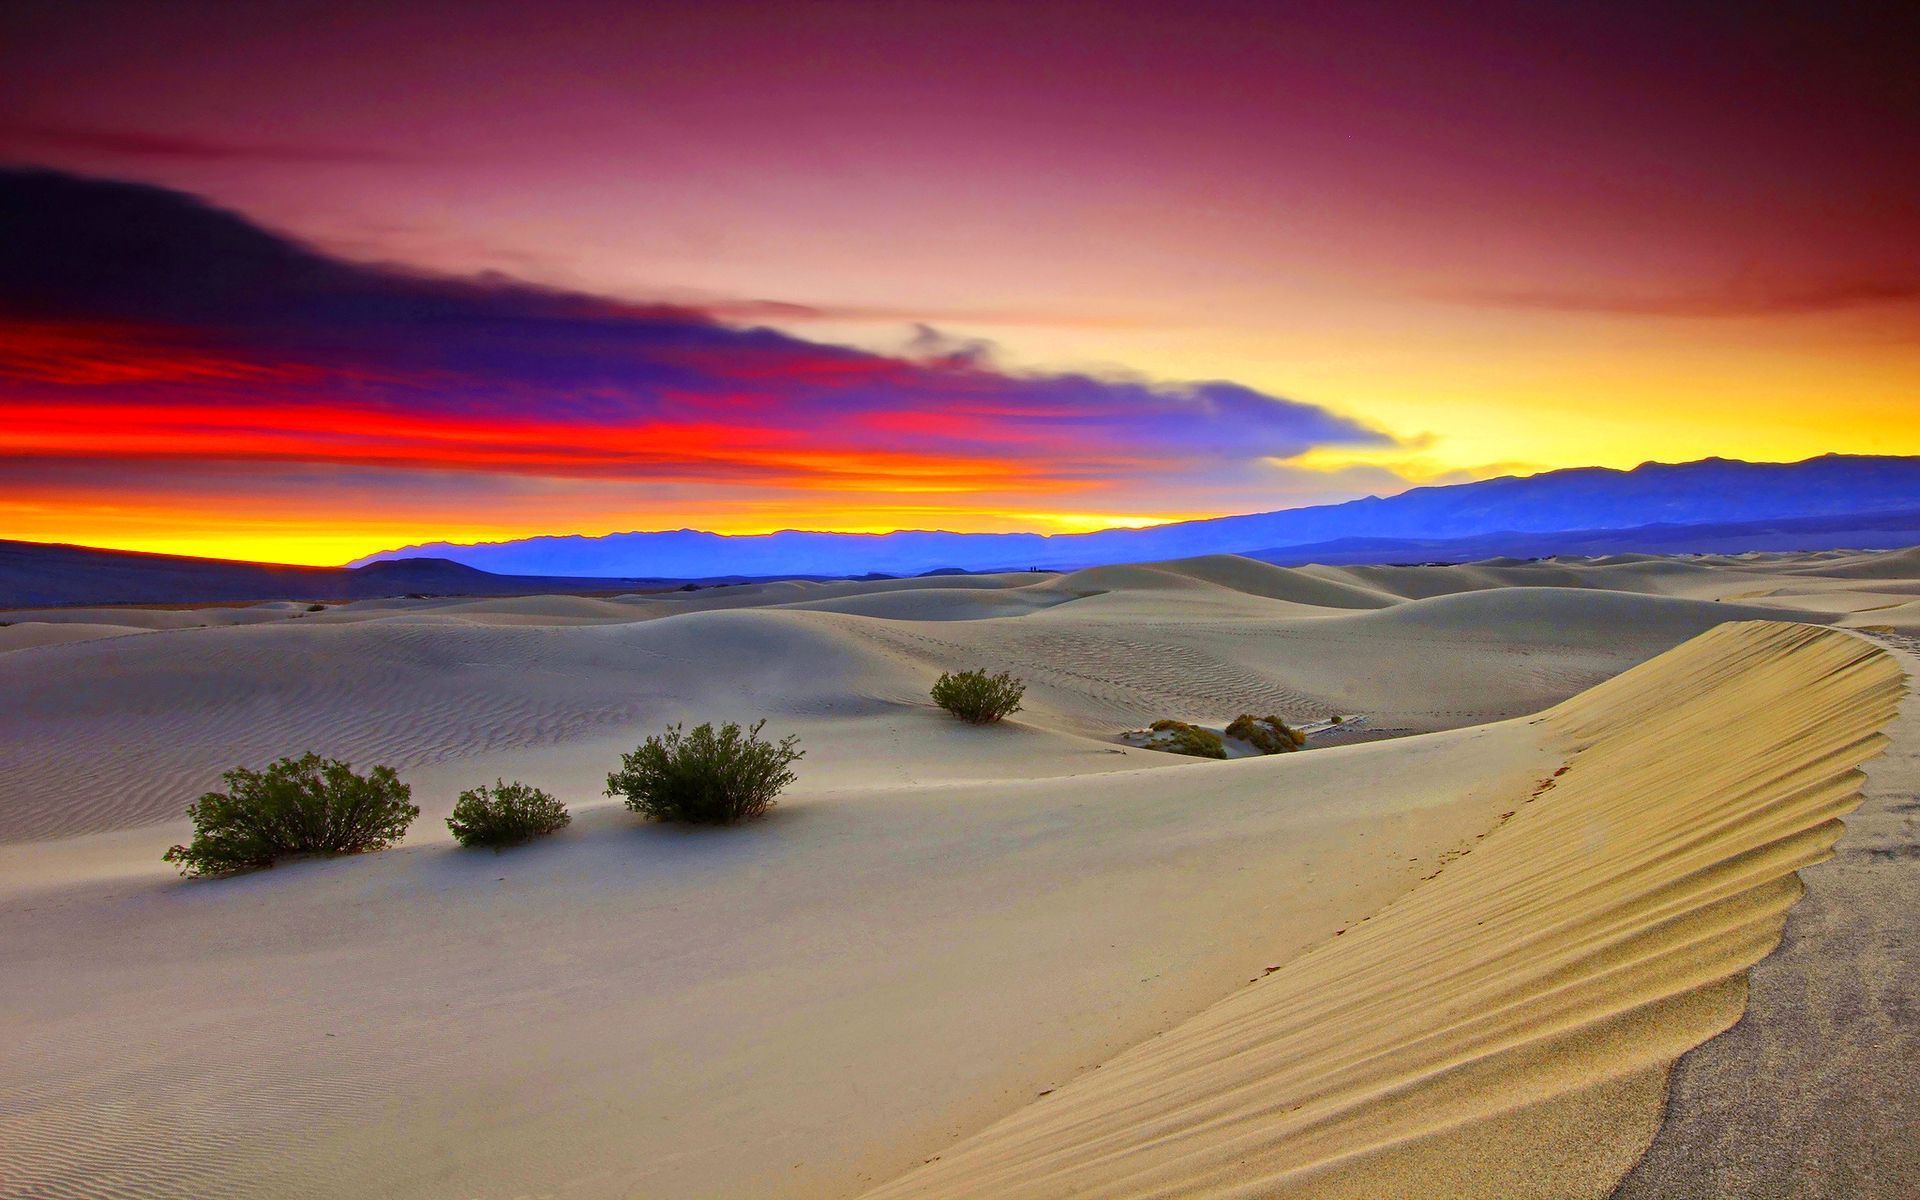 砂漠の壁紙,空,自然,砂,自然の風景,砂漠